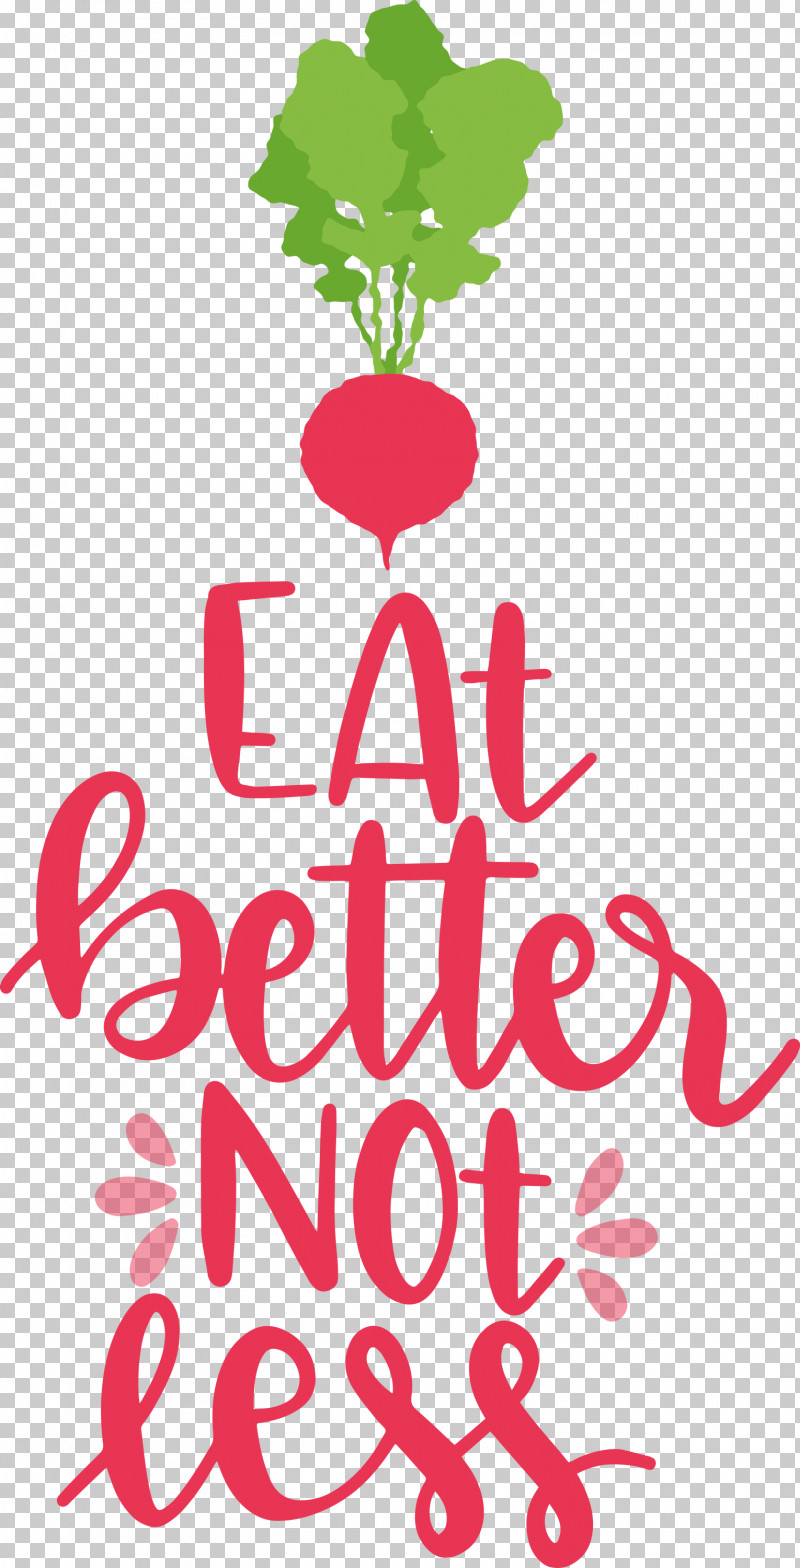 Eat Better Not Less Food Kitchen PNG, Clipart, Behavior, Floral Design, Food, Human, Kitchen Free PNG Download